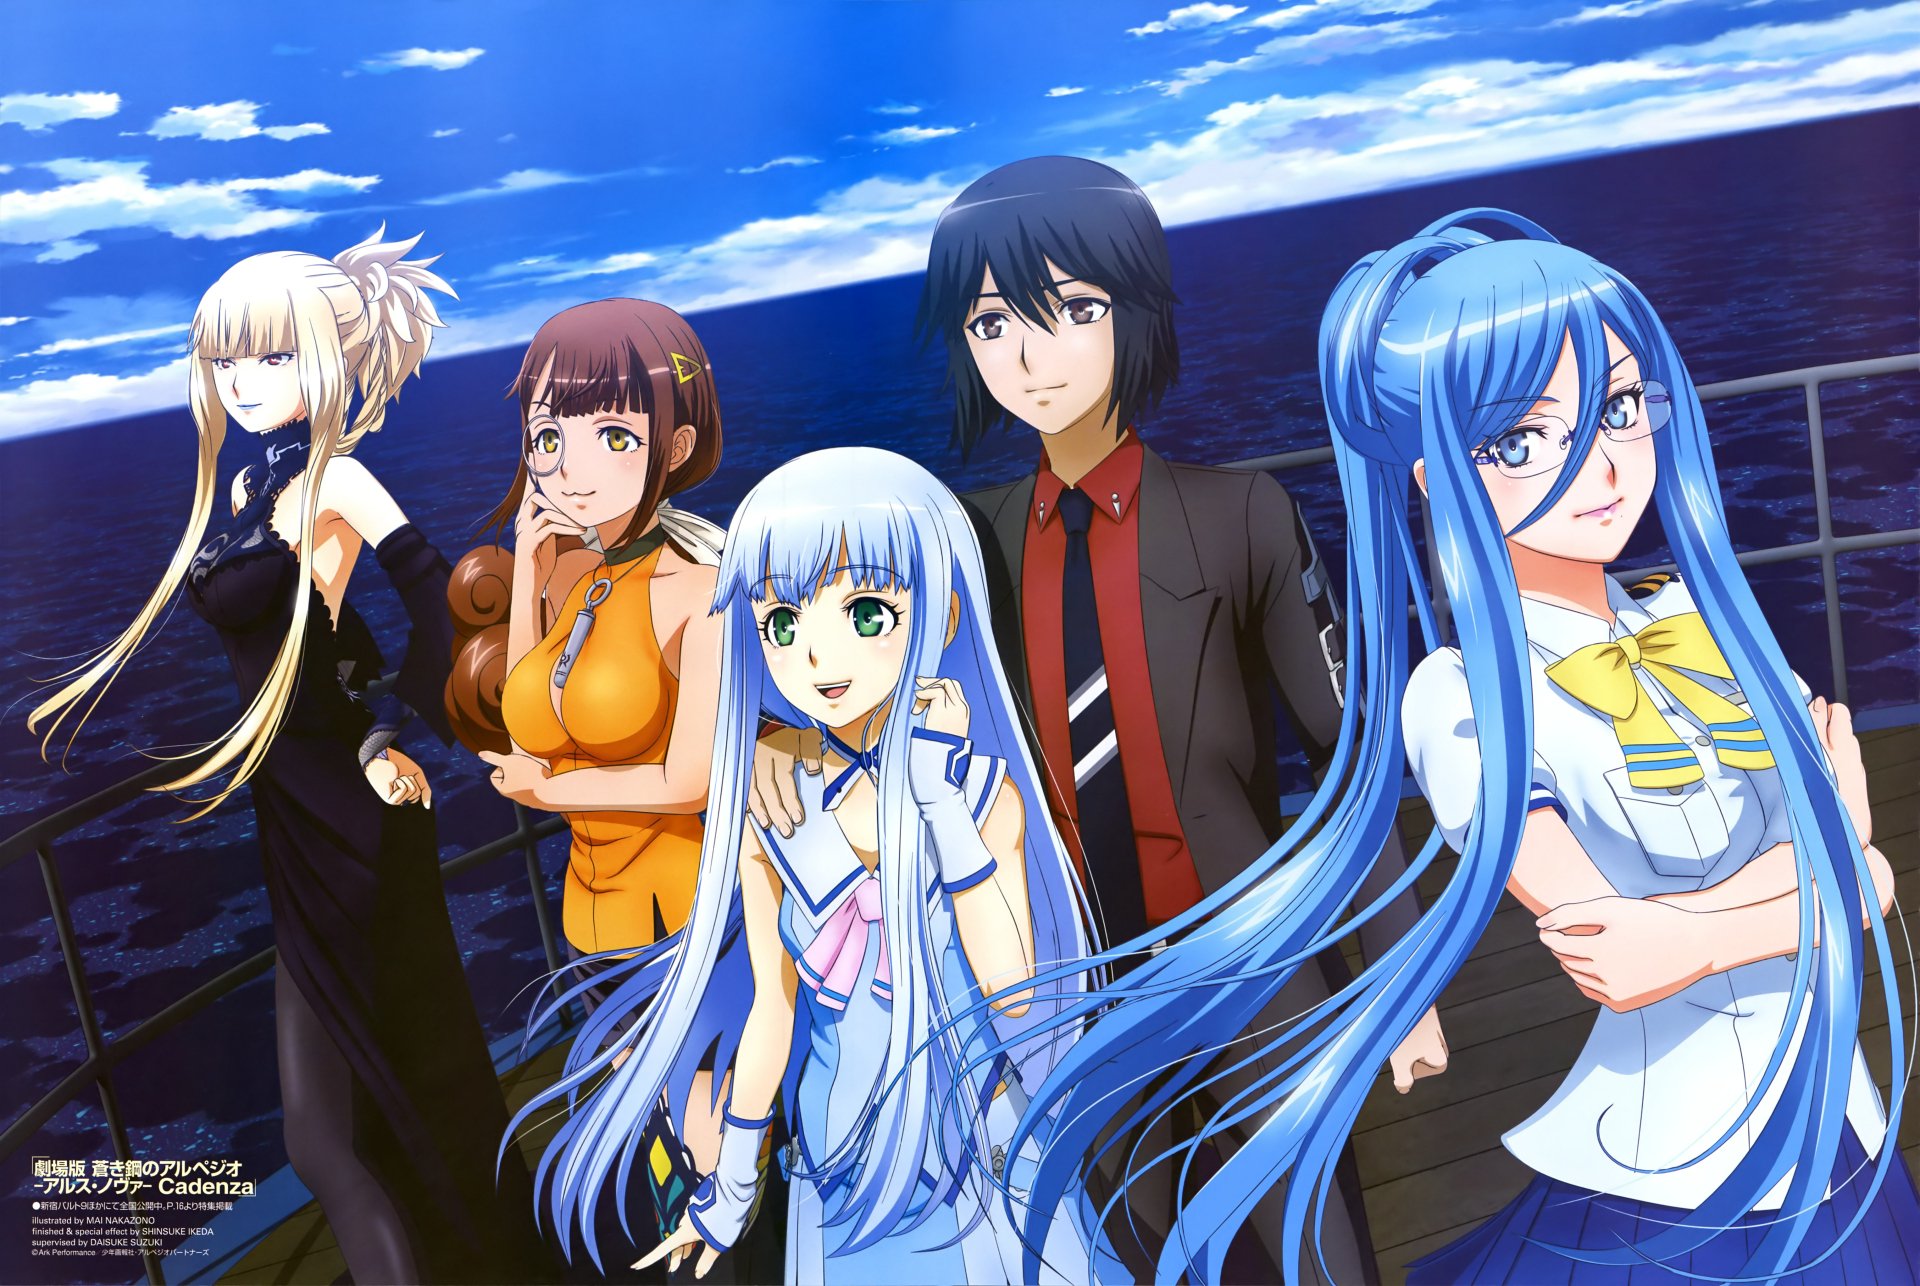 Iona I 401 by Shintaro-mk2 on DeviantArt | Arpeggio of blue steel, Anime,  Anime shows